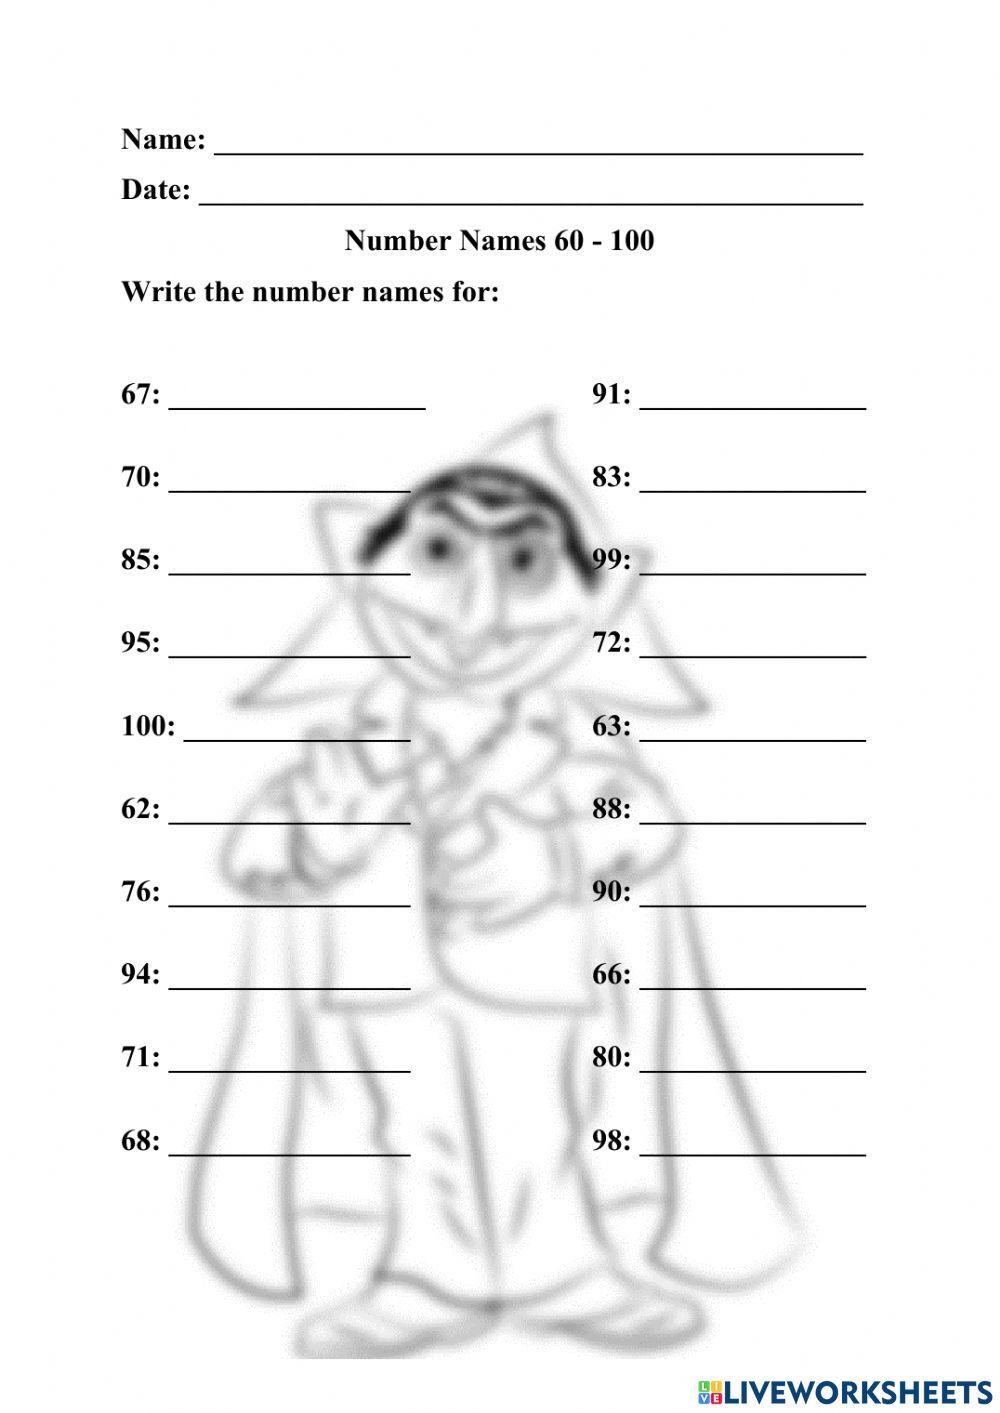 Number names 60 - 100